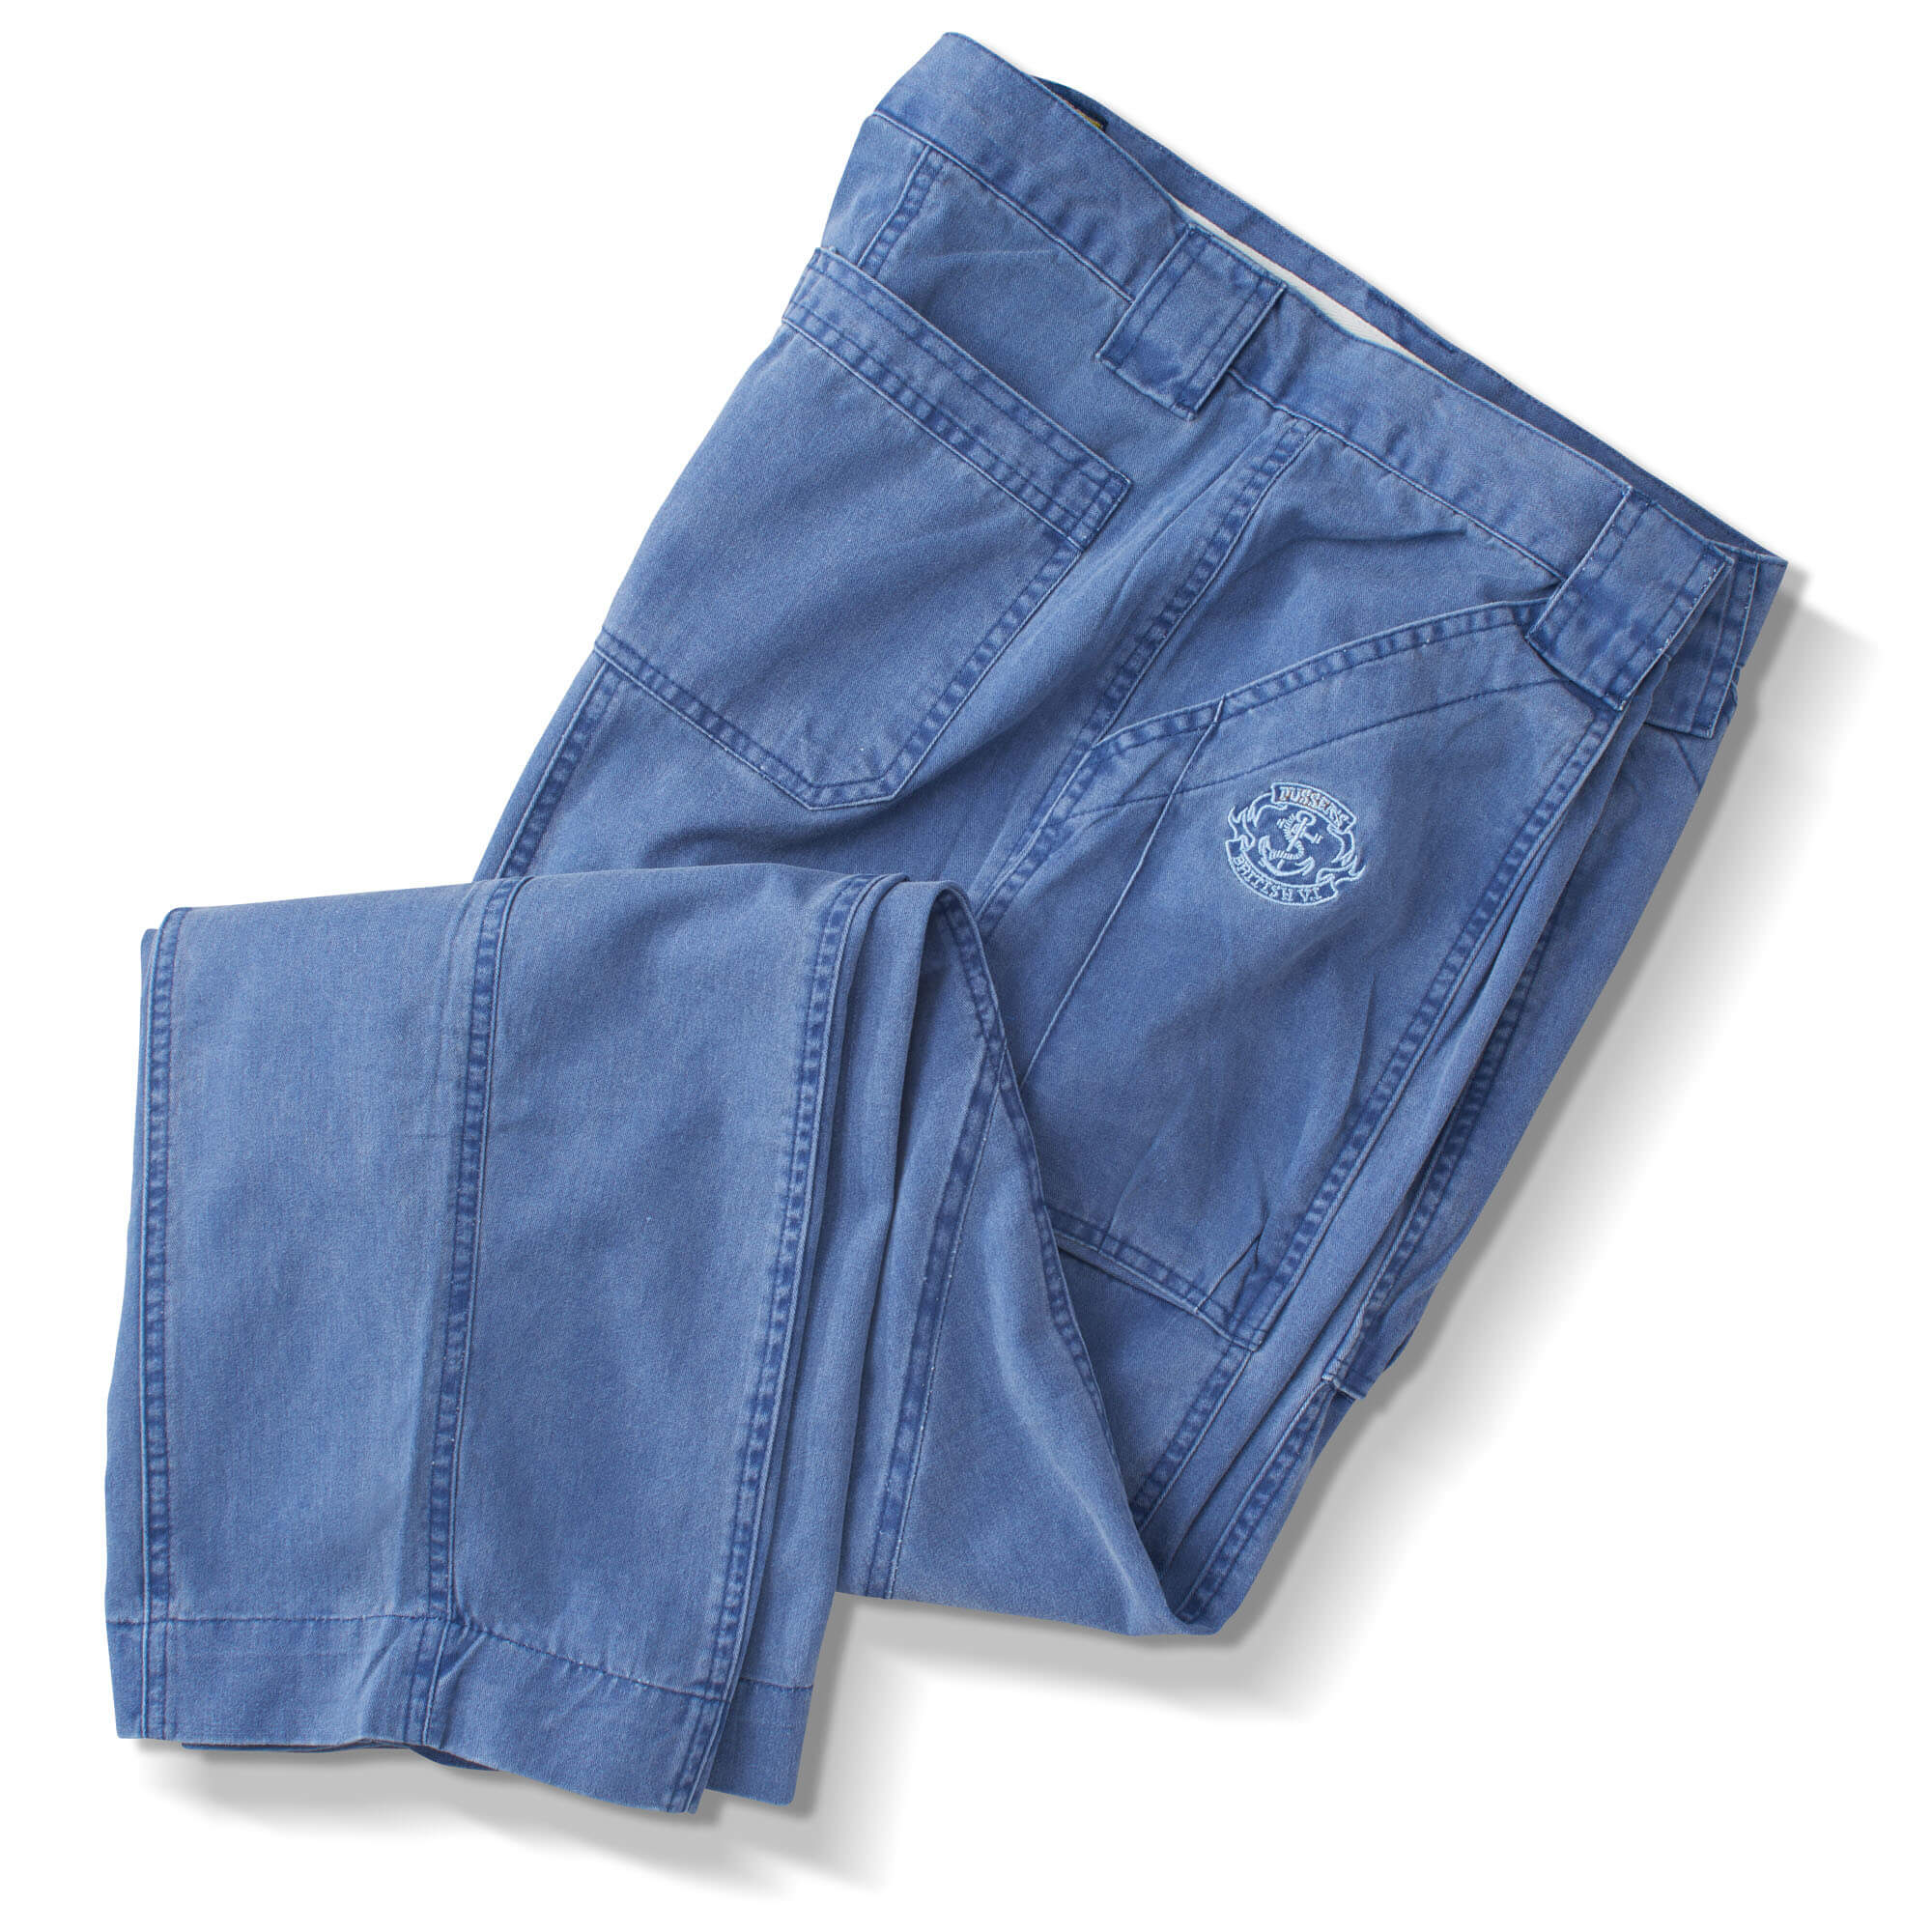 Pusser's Blue Jeans | Pusser's British West Indies, Ltd.